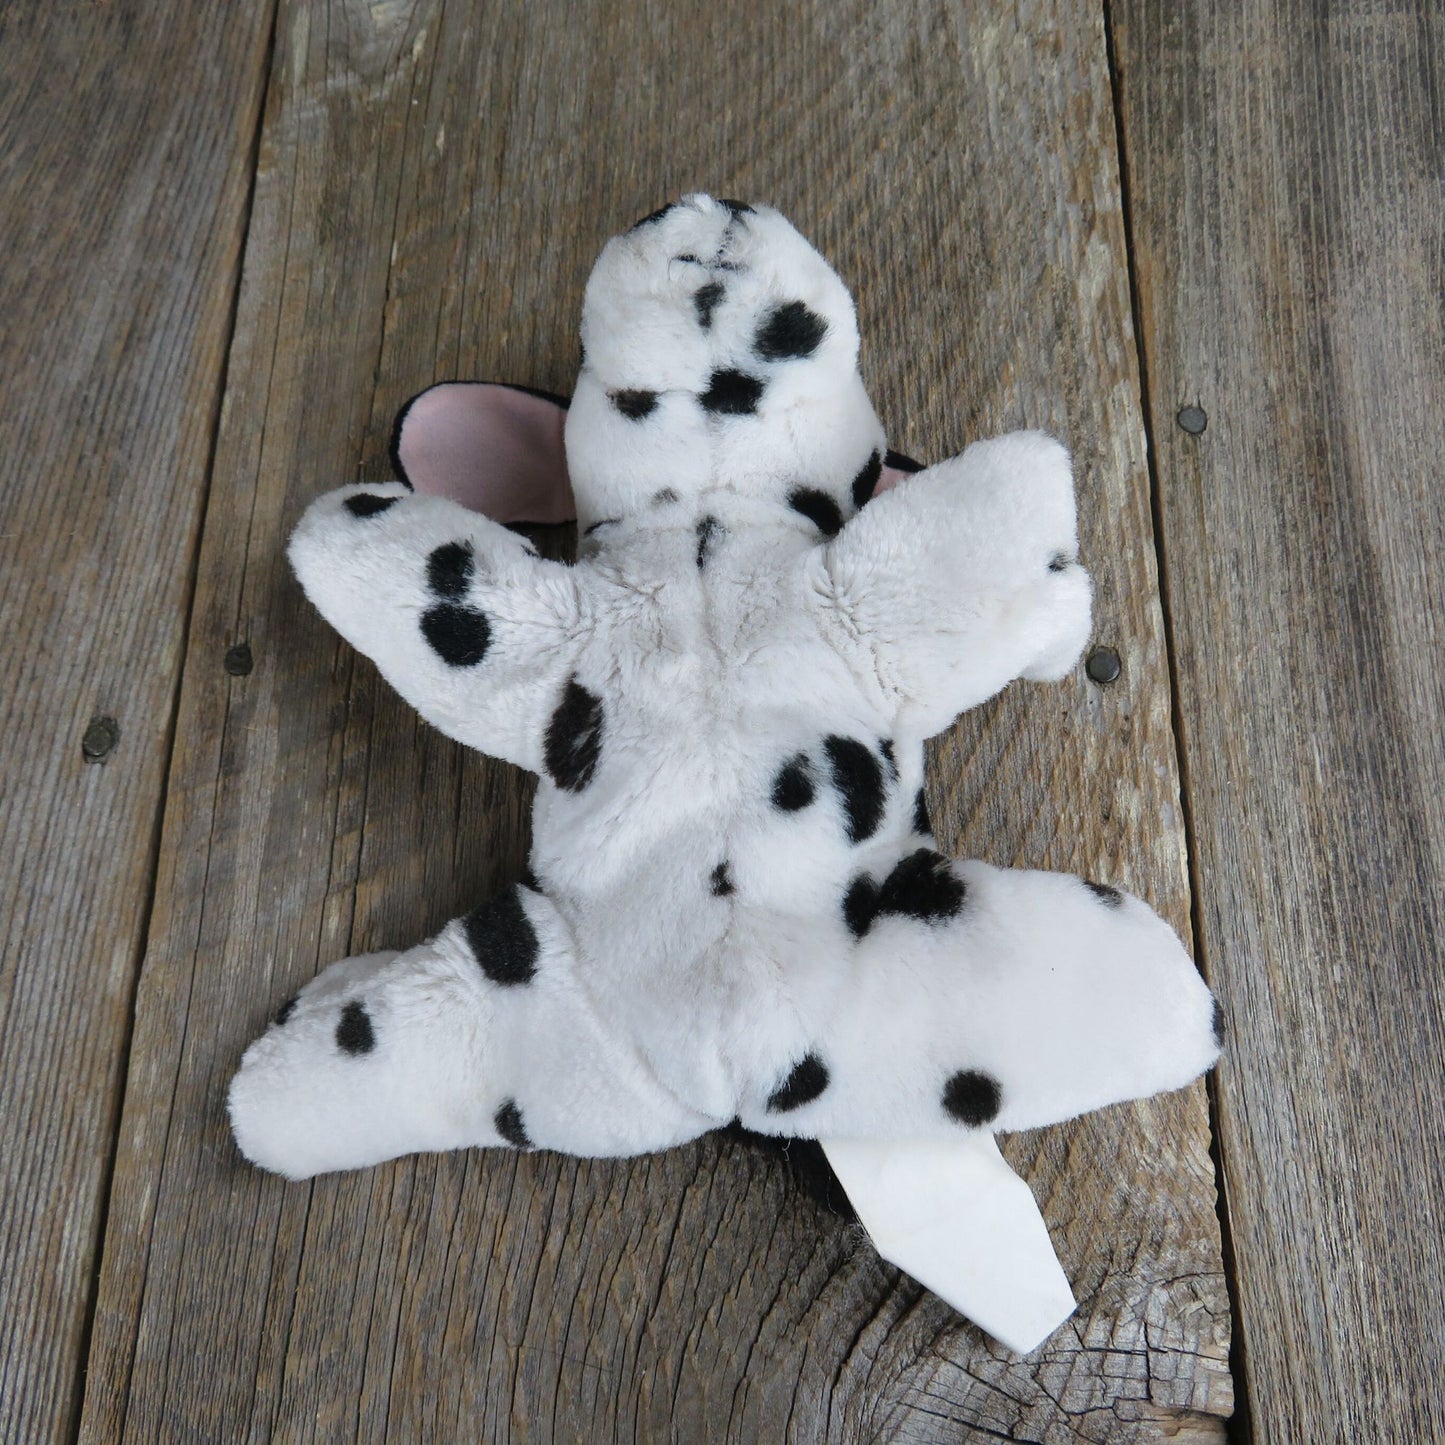 Dalmatian Dog Plush Squeaker Toy White Black Spots Polka Dots Bean Bag Stuffed Animal Weighted